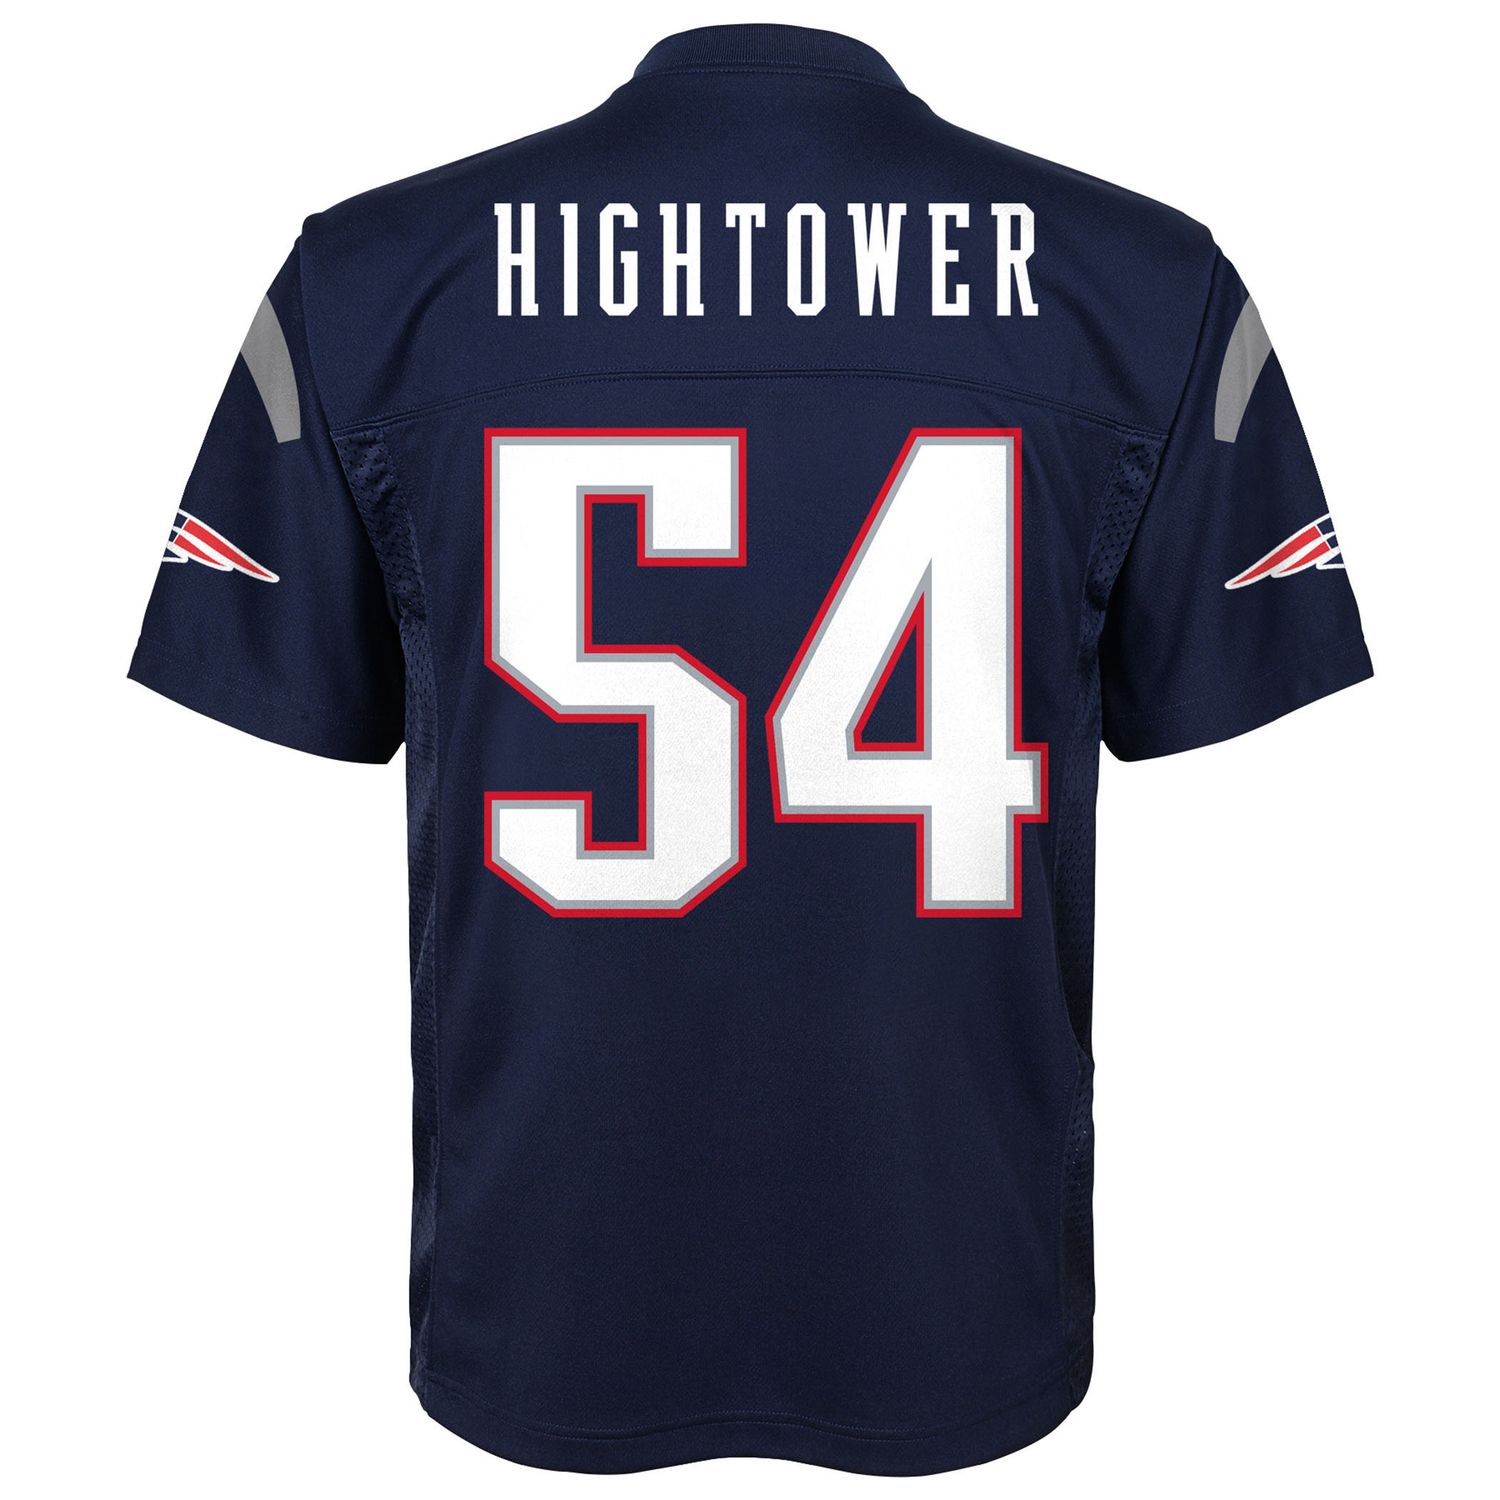 hightower jersey patriots